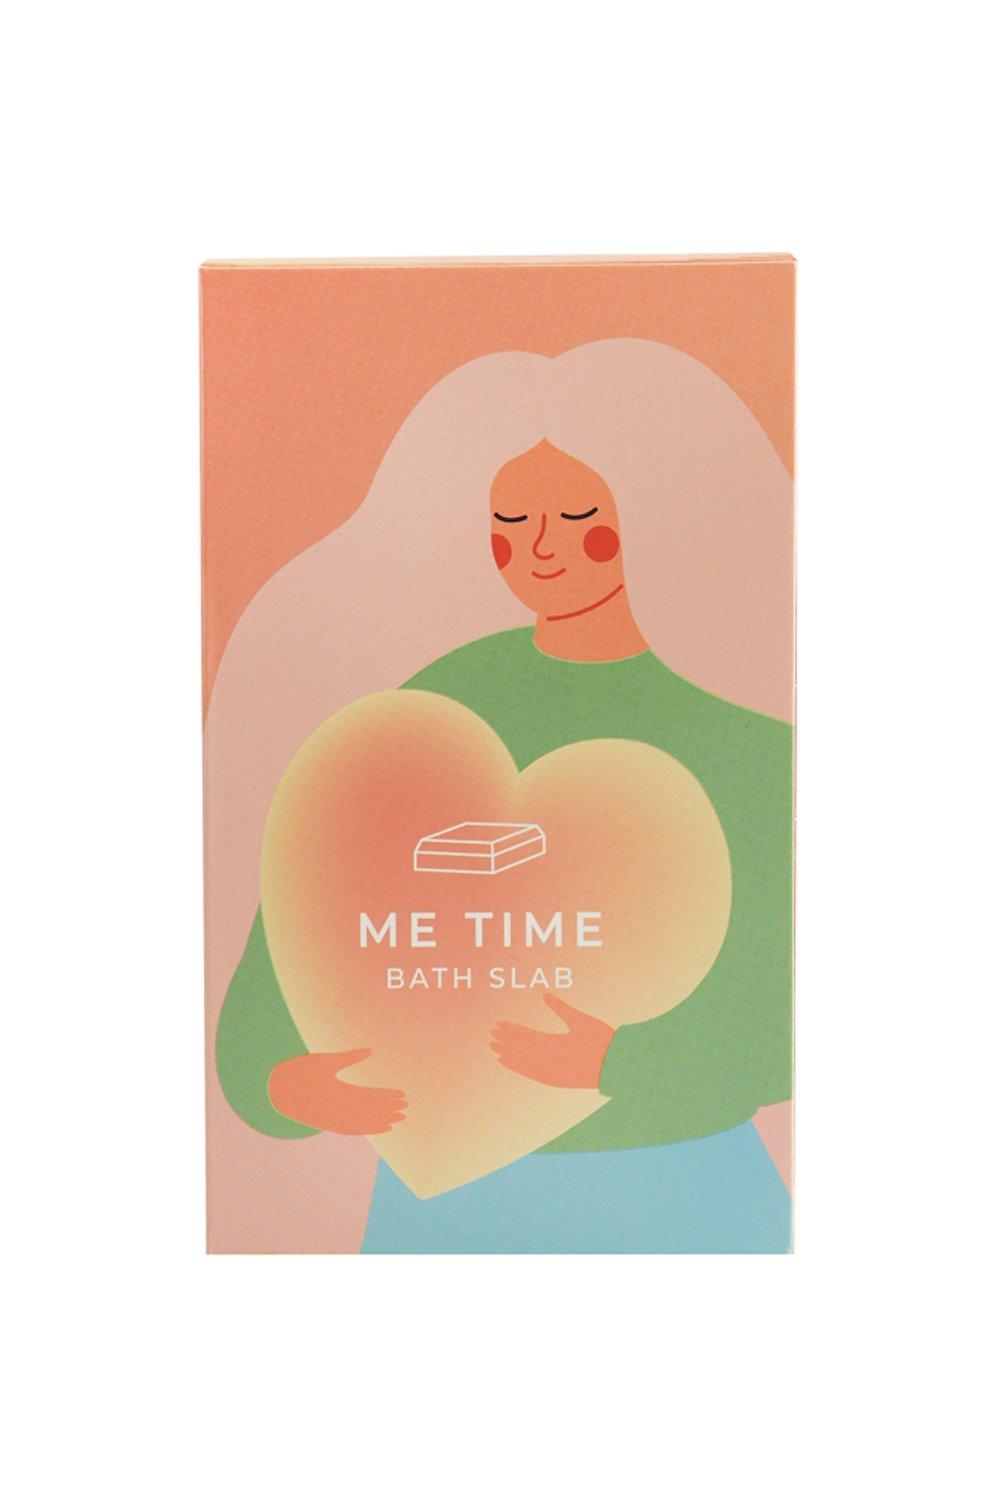 Me Time' Bath Slab Letterbox Card